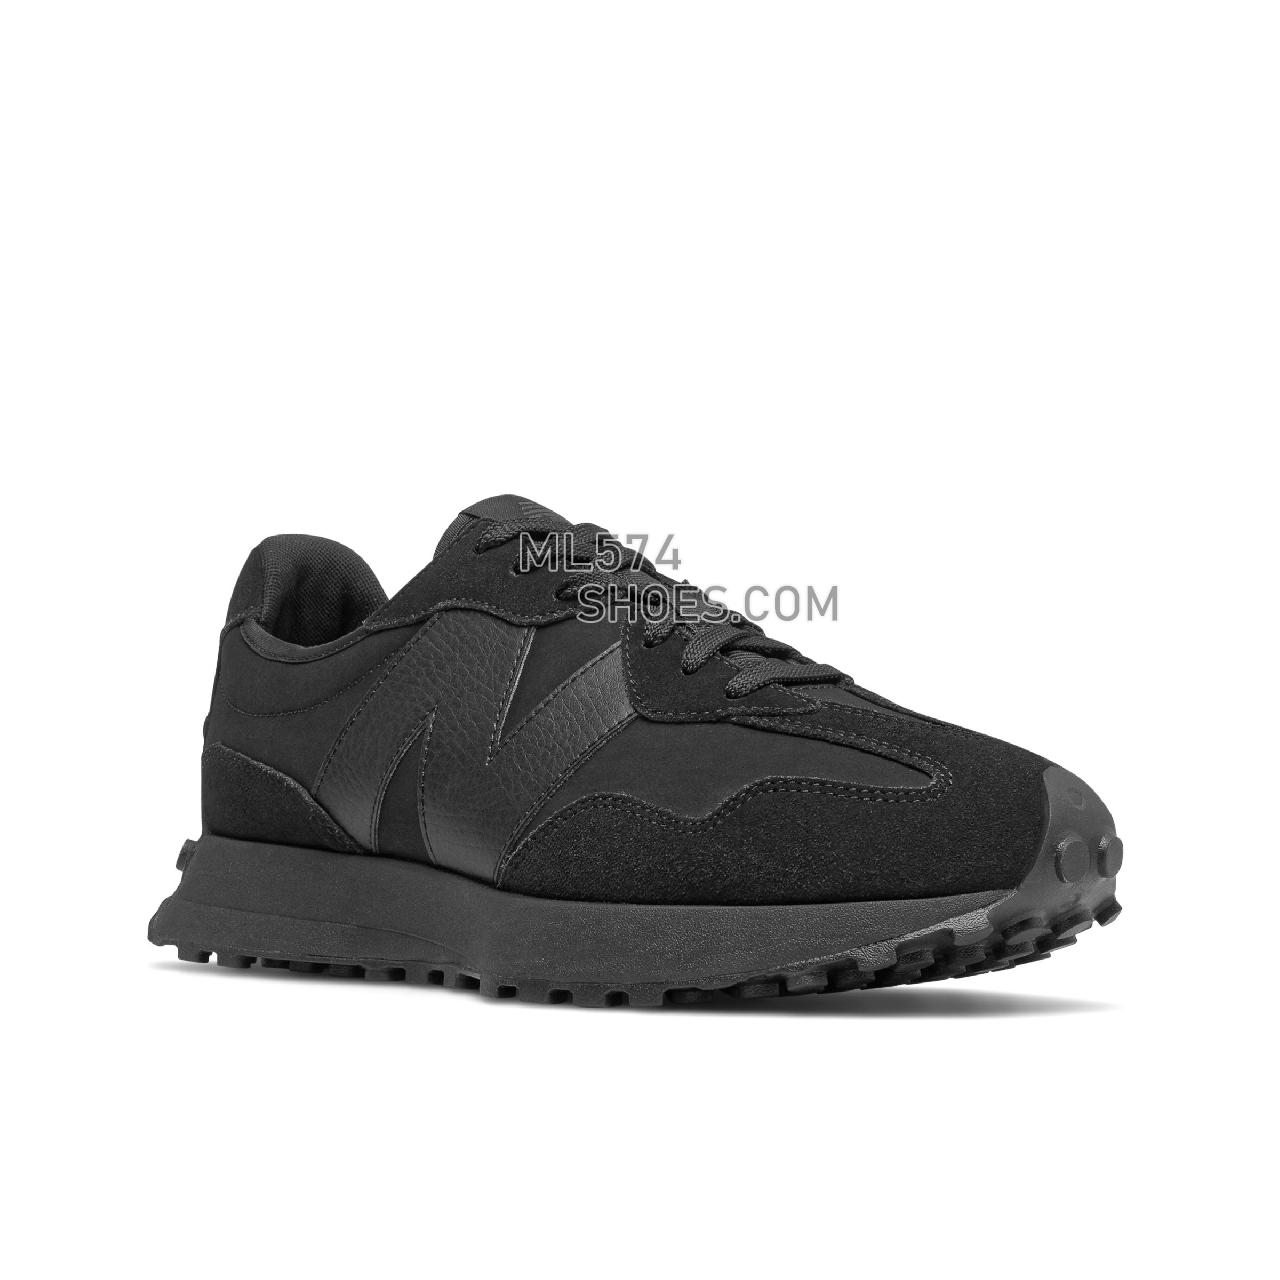 New Balance 327 - Unisex Men's Women's Sport Style Sneakers - Black - MS327LX1